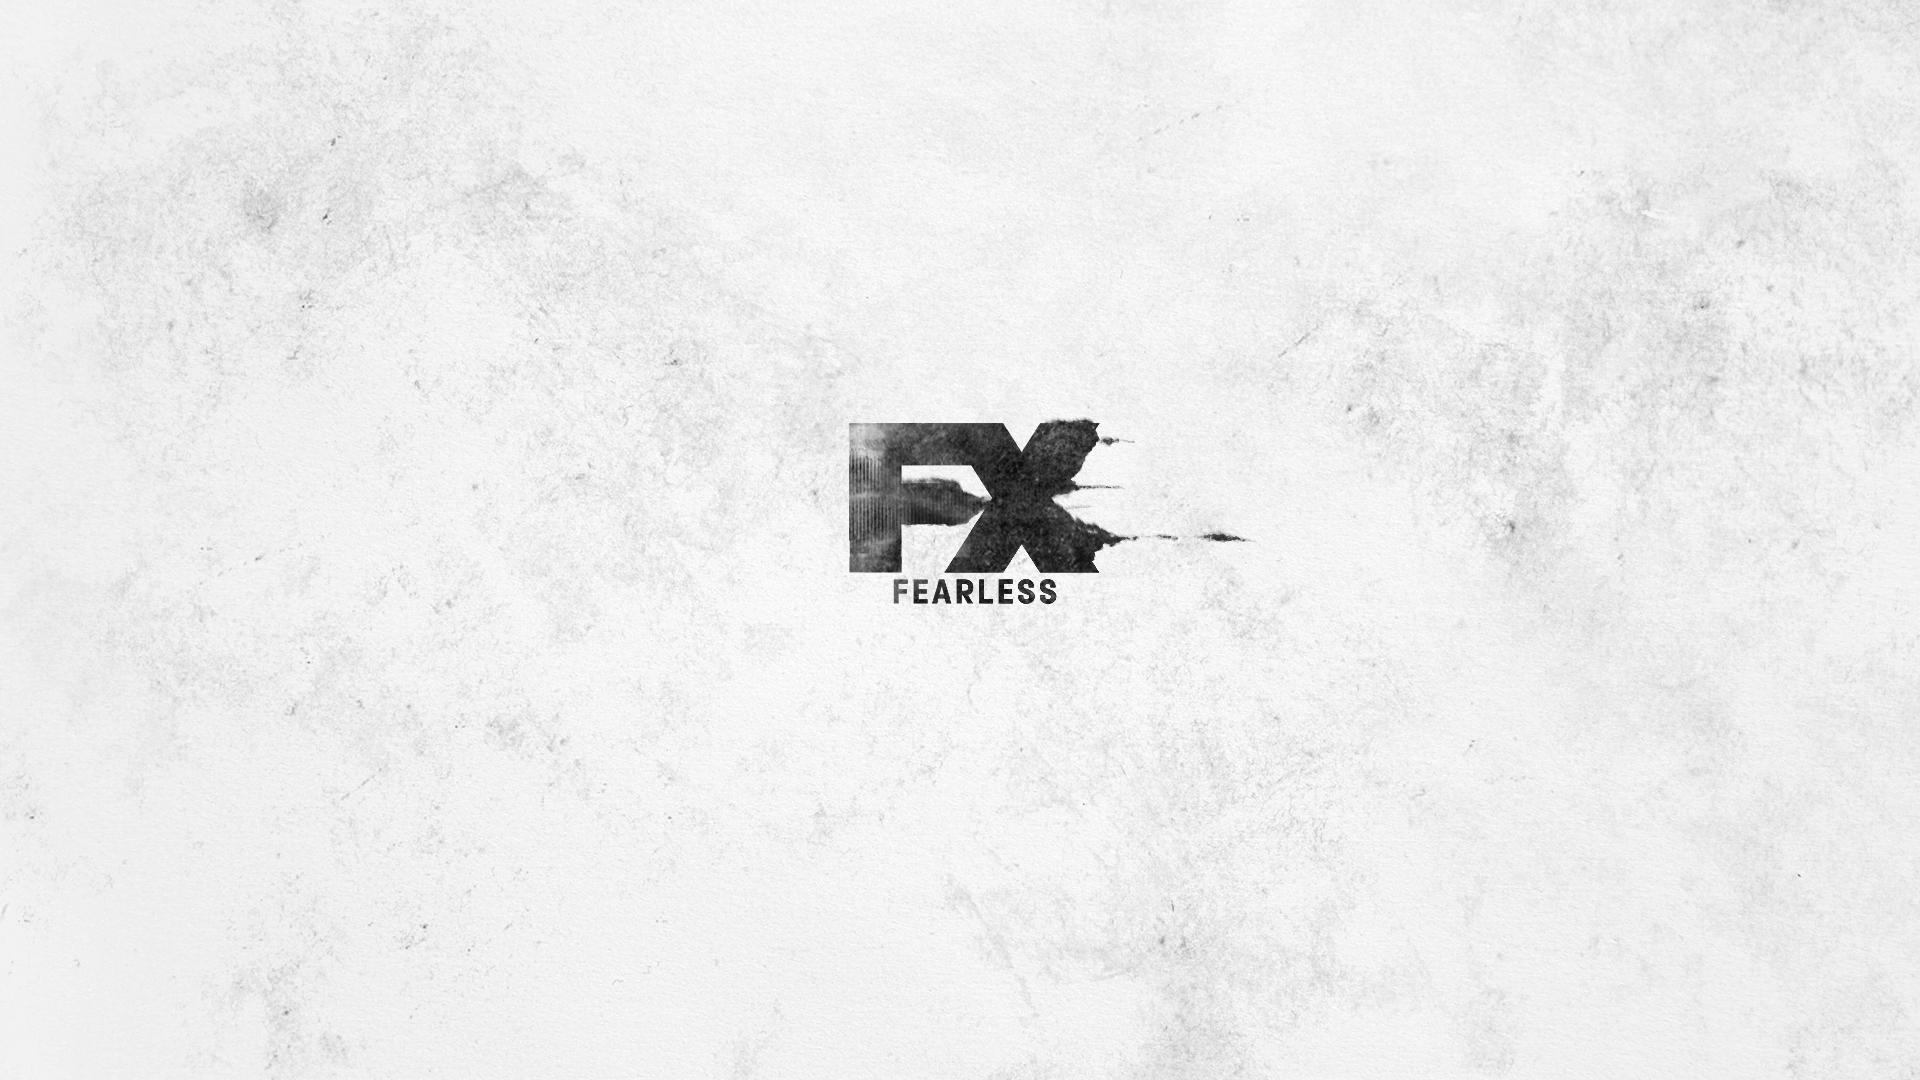 FX - Fearless